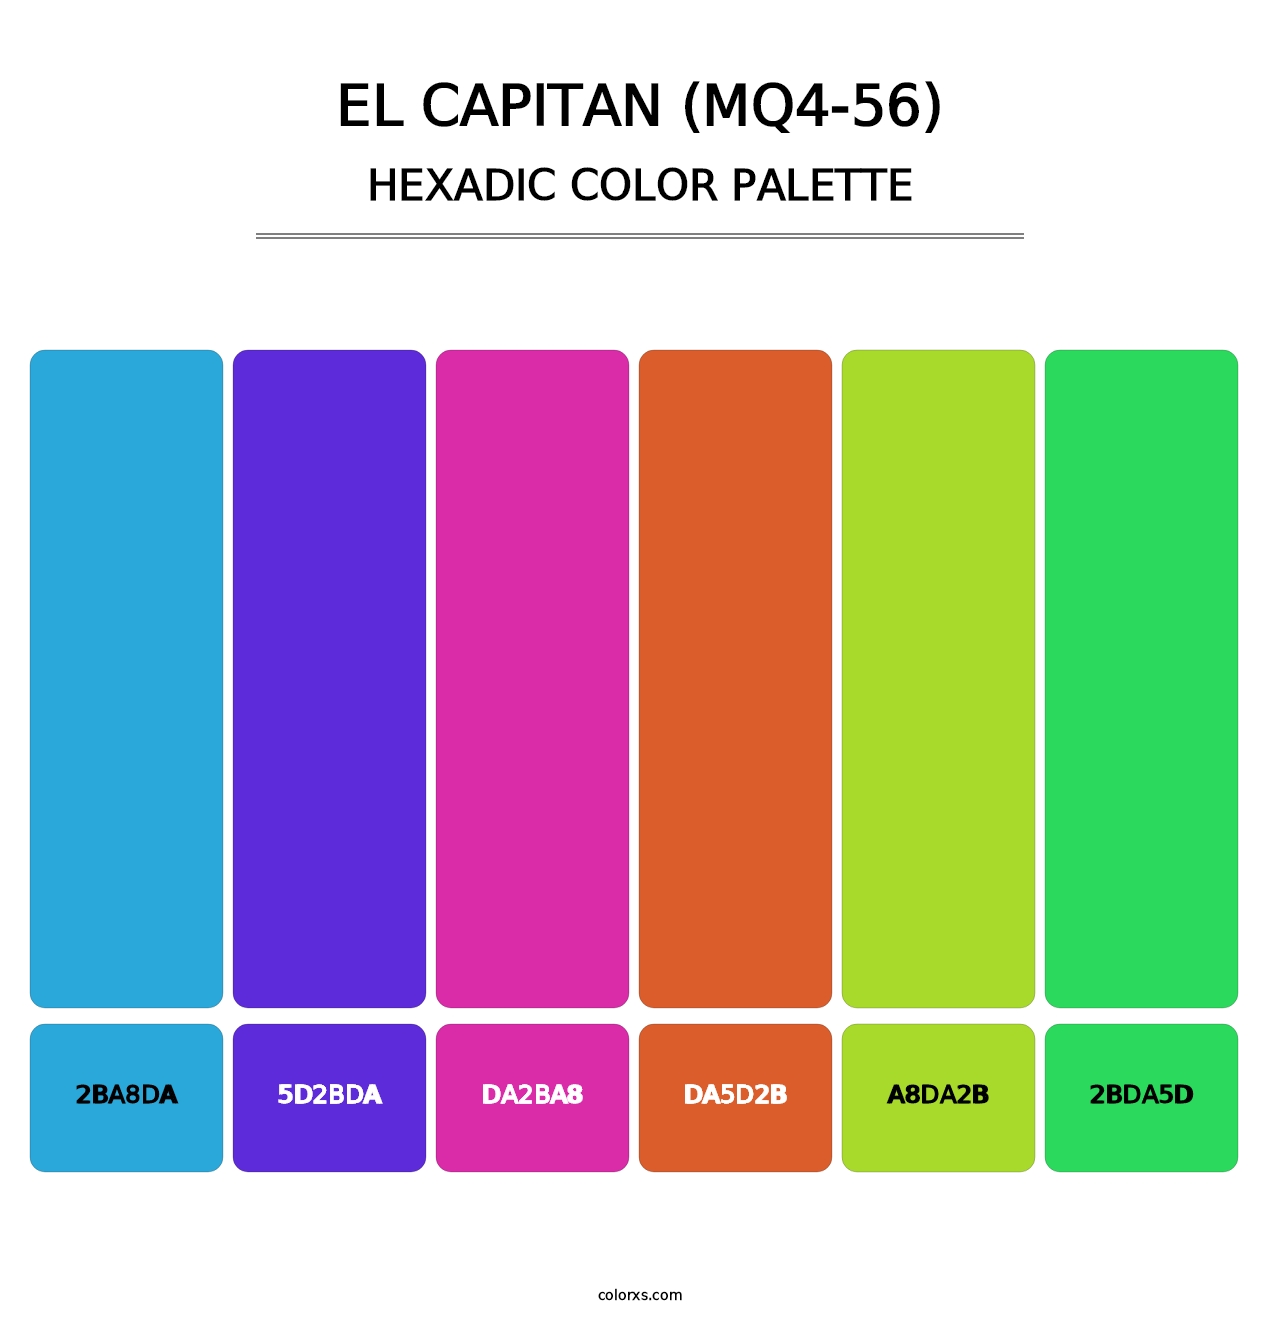 El Capitan (MQ4-56) - Hexadic Color Palette